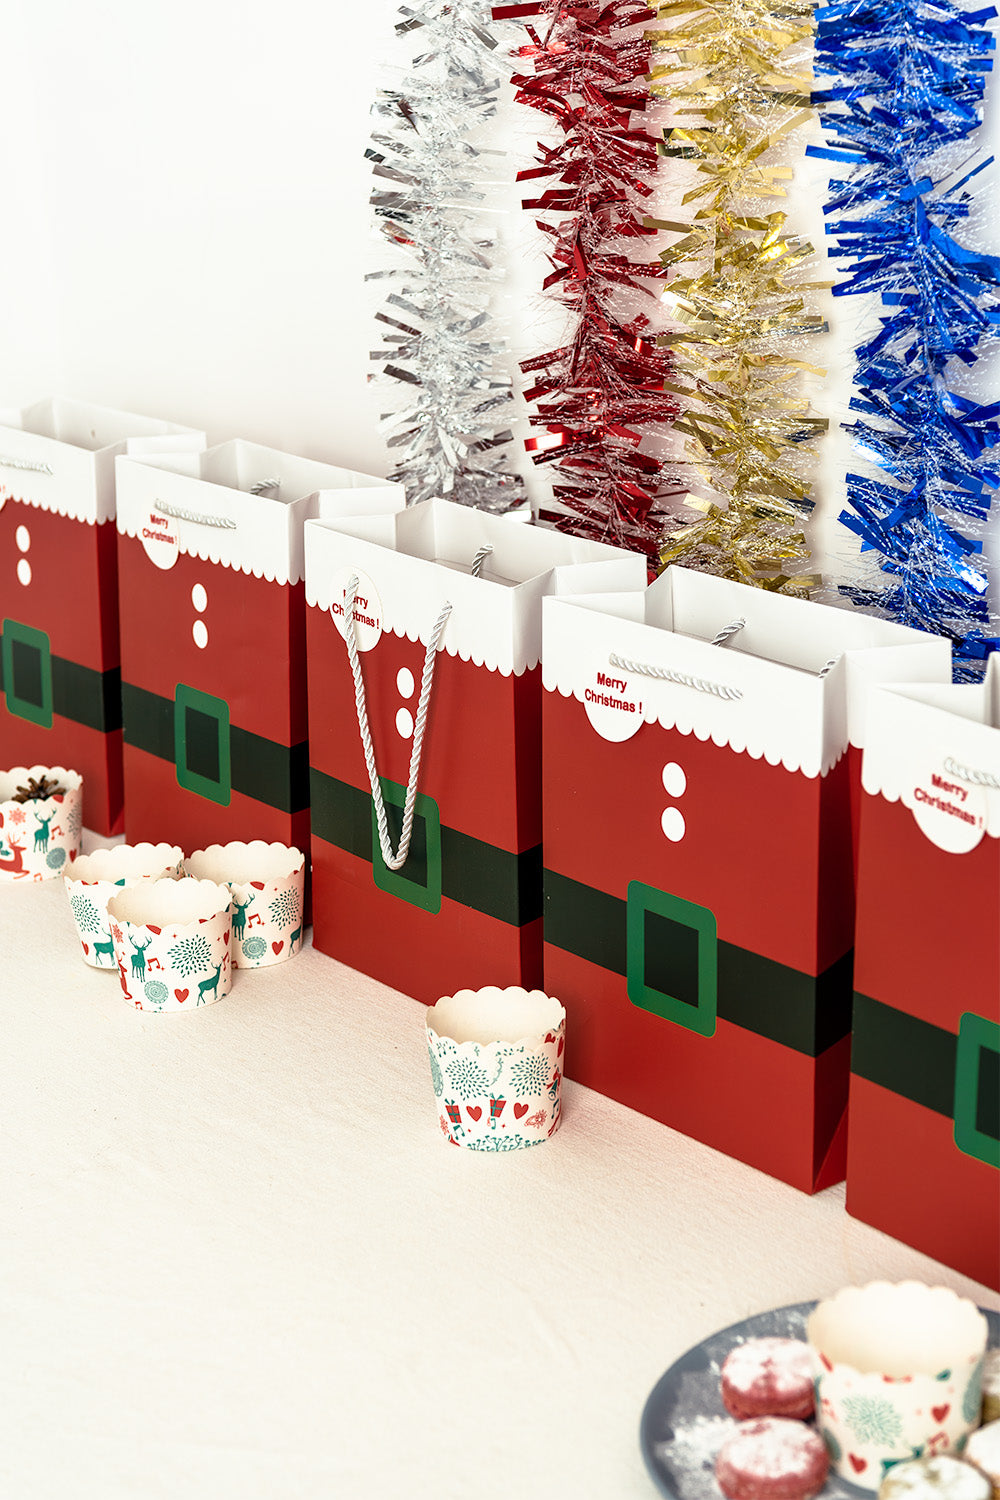 Crisky Merry Christmas Santa Claus Gift Bags, Deep Red, Medium Bags 12 Pcs, 10" x 8" x 4"